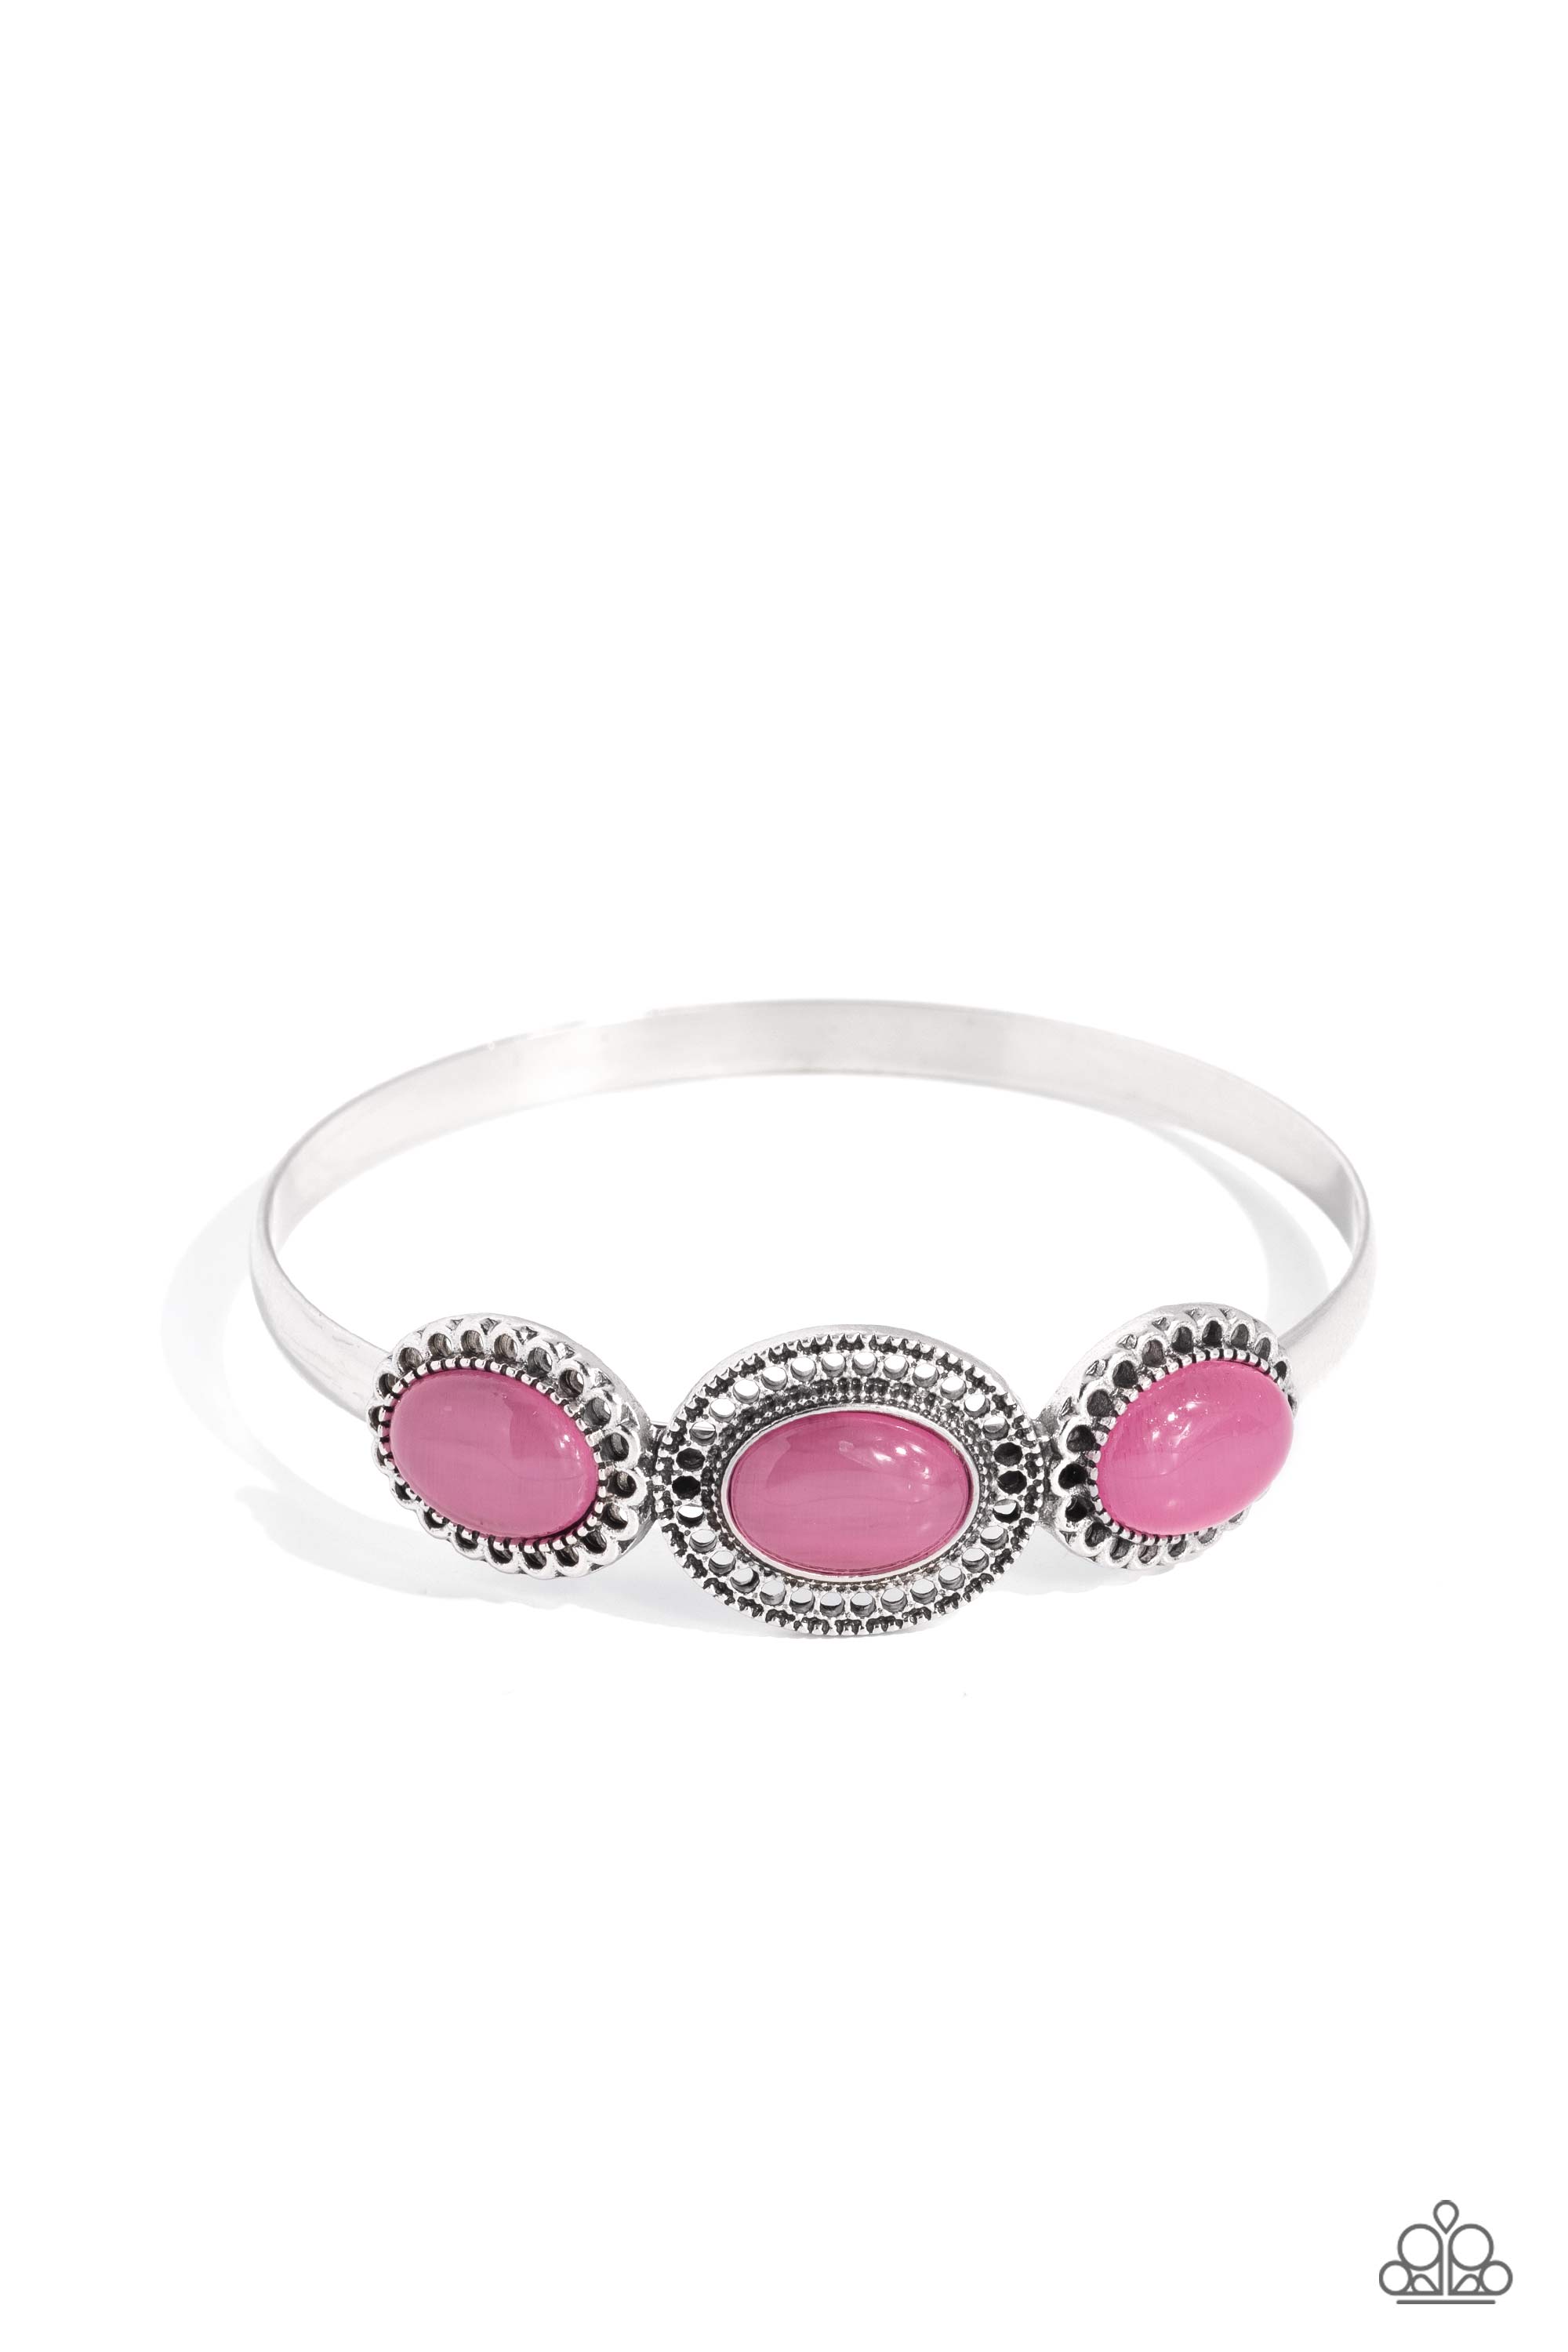 A DAYDREAM Come True Pink Cat's Eye Stone Bangle Bracelet - Paparazzi Accessories- lightbox - CarasShop.com - $5 Jewelry by Cara Jewels